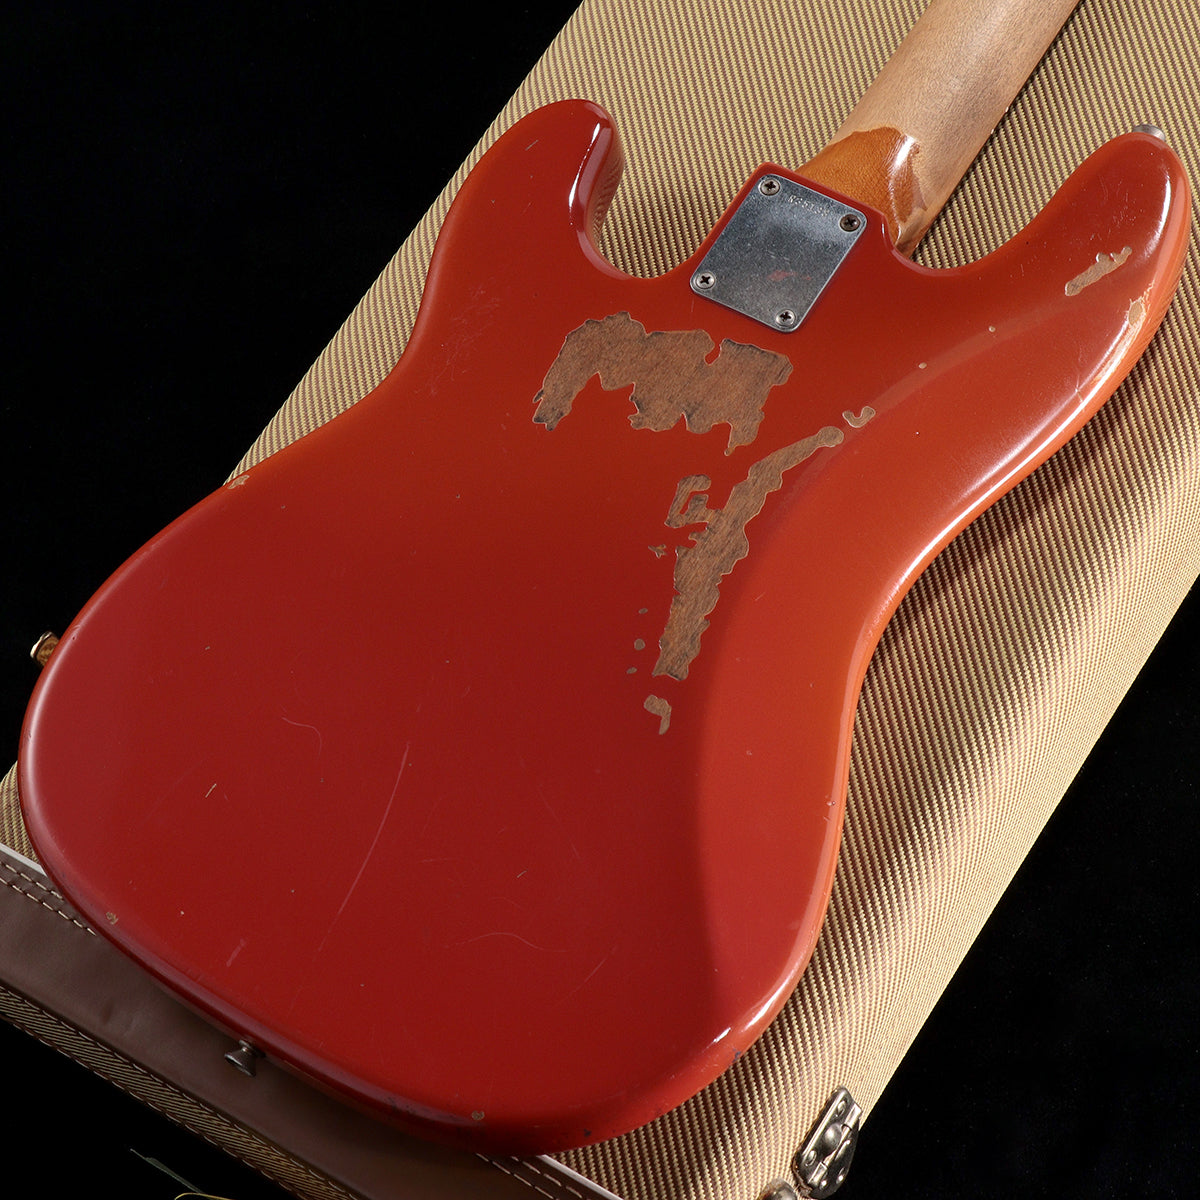 [SN R35138] USED FENDER CUSTOM SHOP / Pino Palladino Signature Precision Bass Relic Fiesta Red over Desert Sand [05]